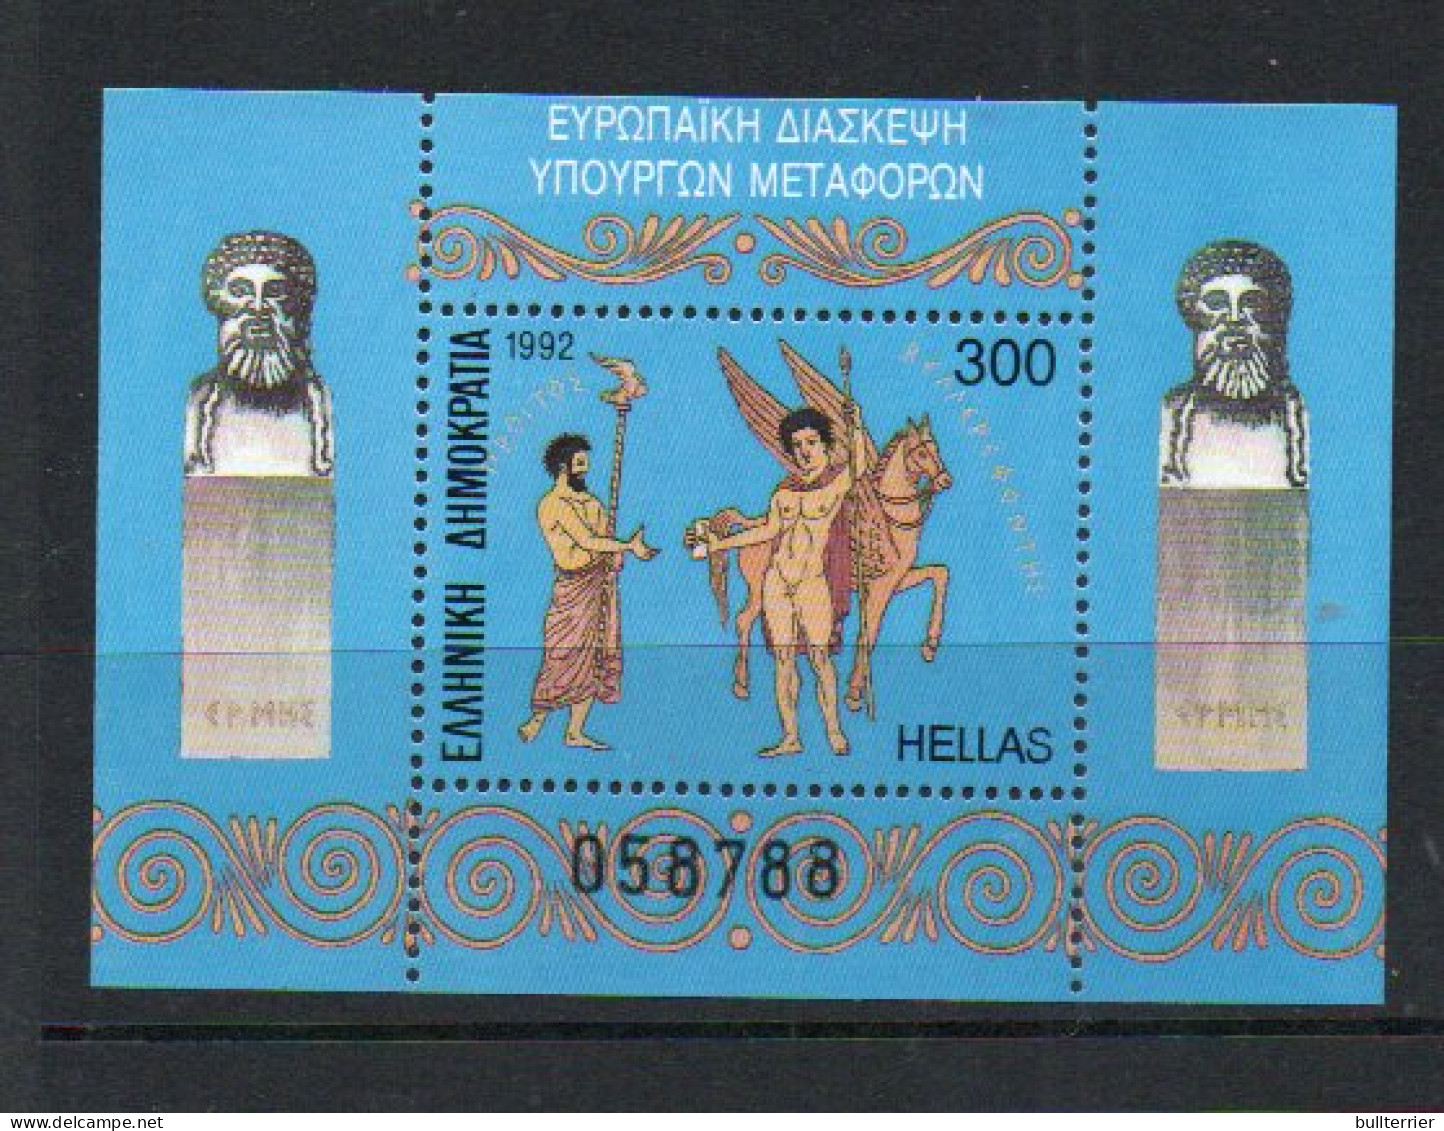 GREECE - 1992- EUROPEAN TRANSPORT MINISTERS UCONF  (sg Ms 1903)  SOUVENIR SHEET  MINT NEVER HINGED,SG £16 - Ungebraucht